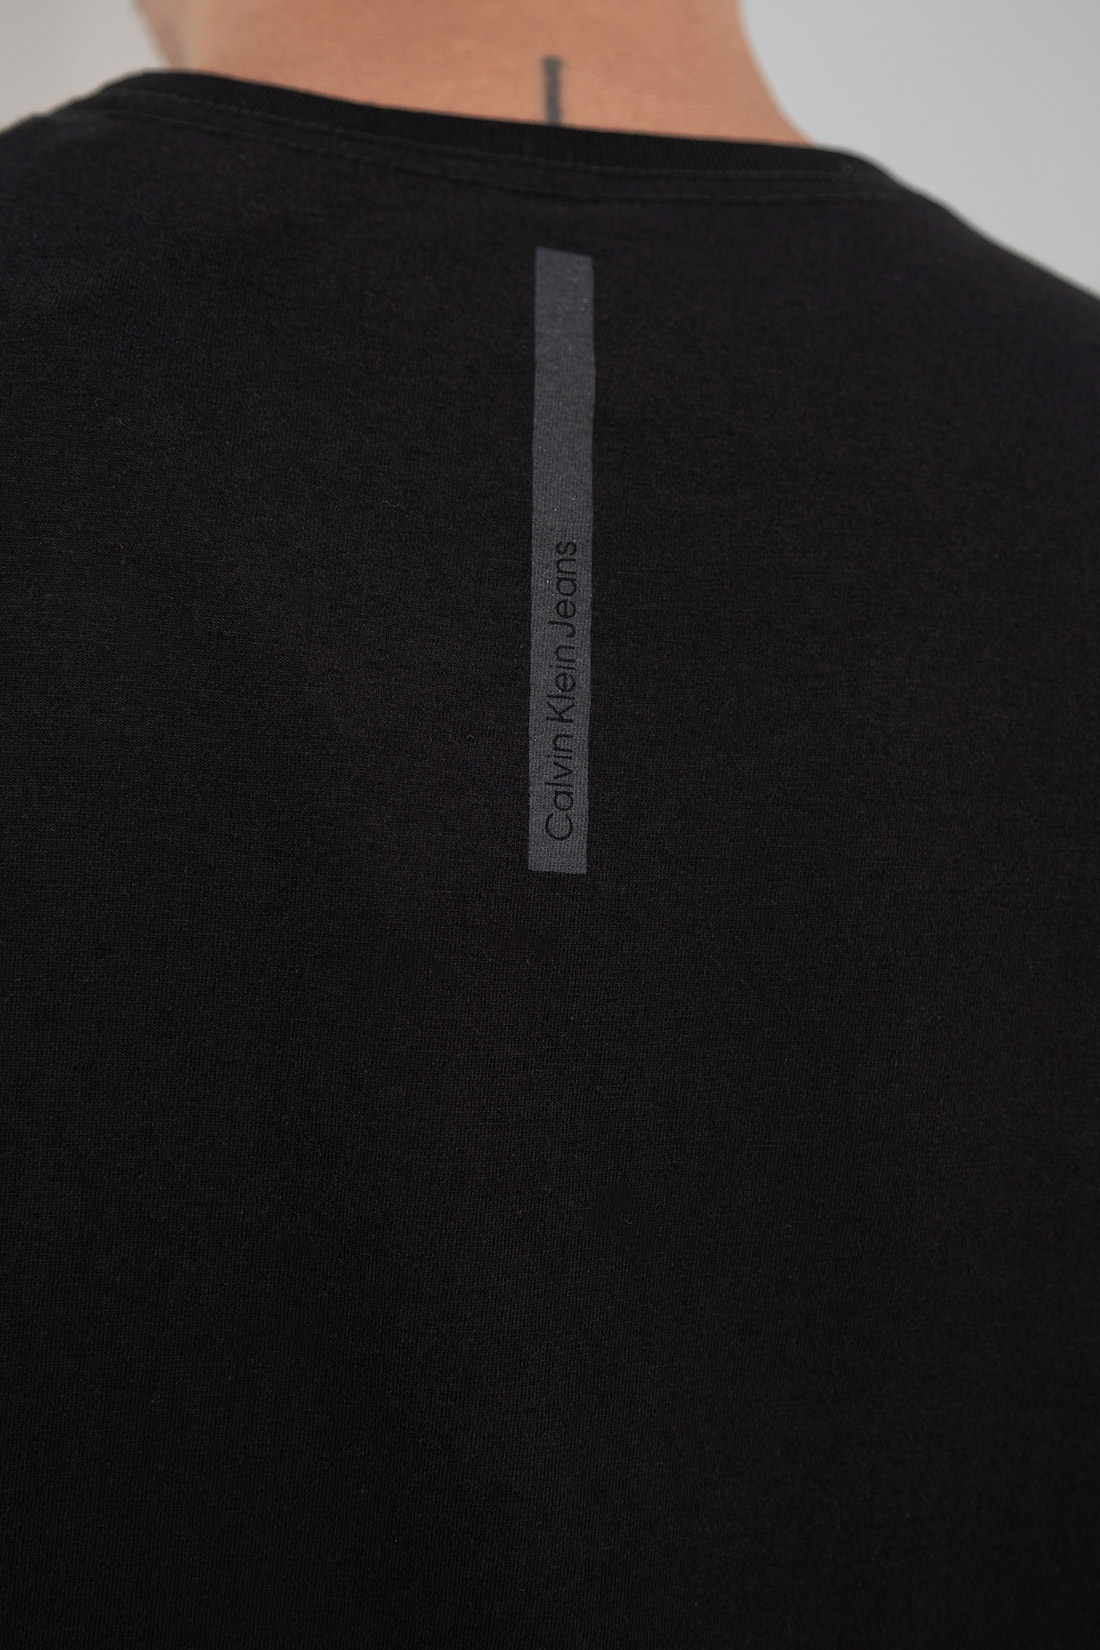 Camiseta Ml Calvin Klein Jeans Linha